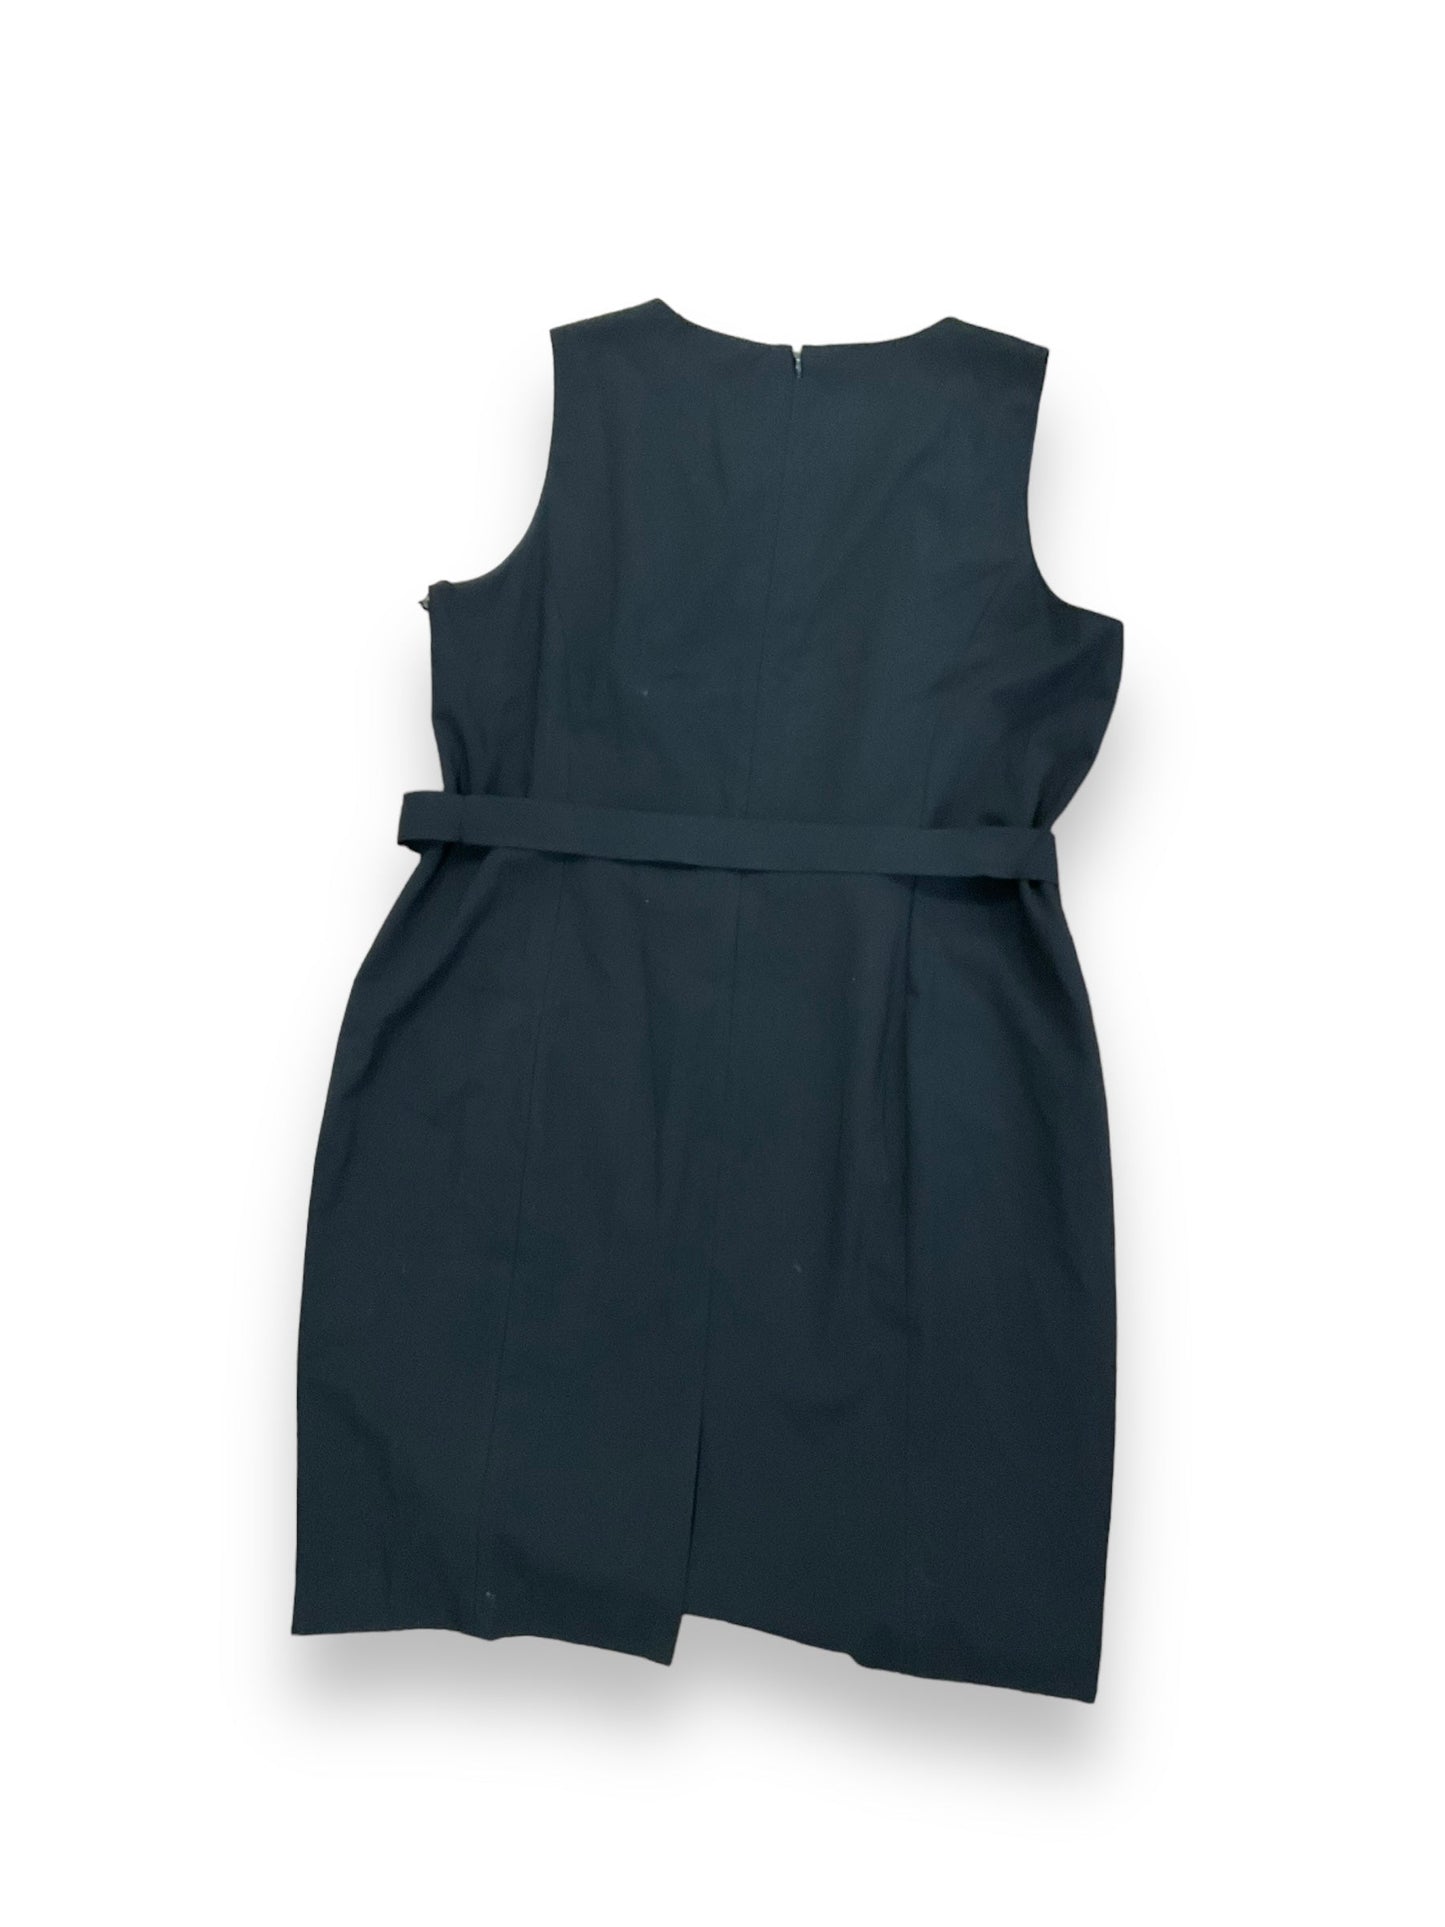 Black Dress Casual Short Calvin Klein, Size 1x